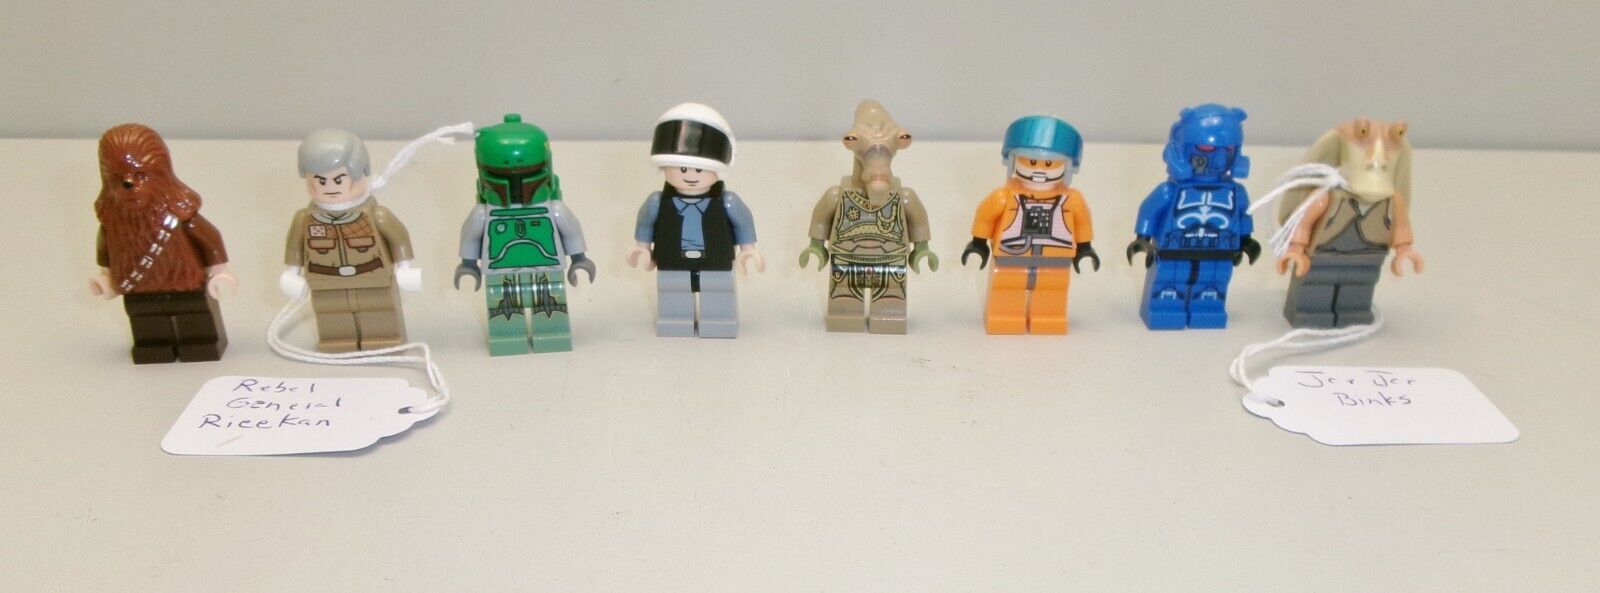 Lego Star Wars 8 minifigures Wookie, Mandalorian, General Rieekan, Jar Jar Binks